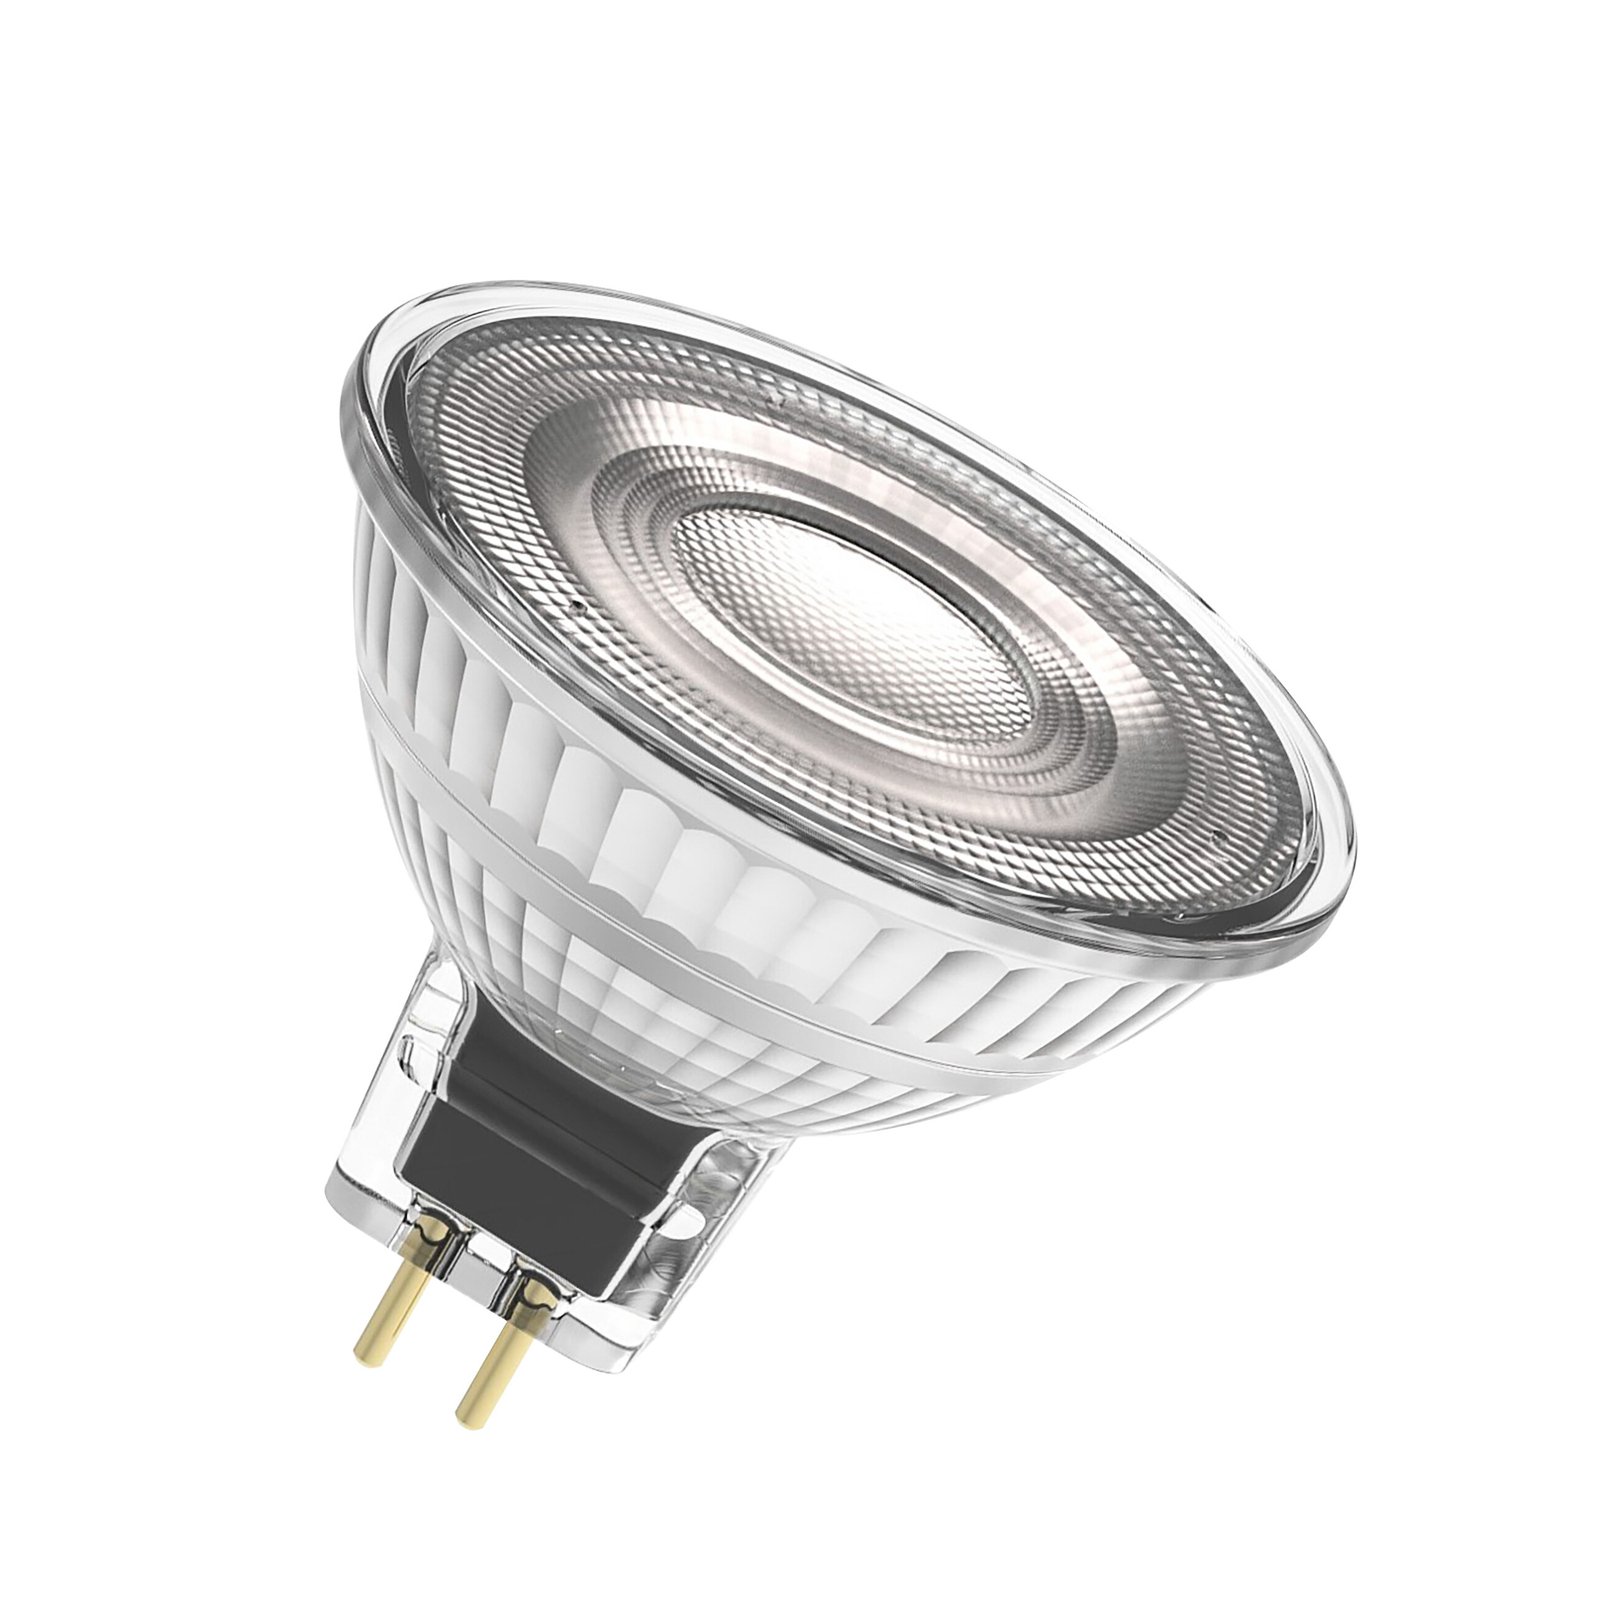 OSRAM LED reflectorlamp, GU5.3, 2,6 W, 12 V, 2700 K, 120°